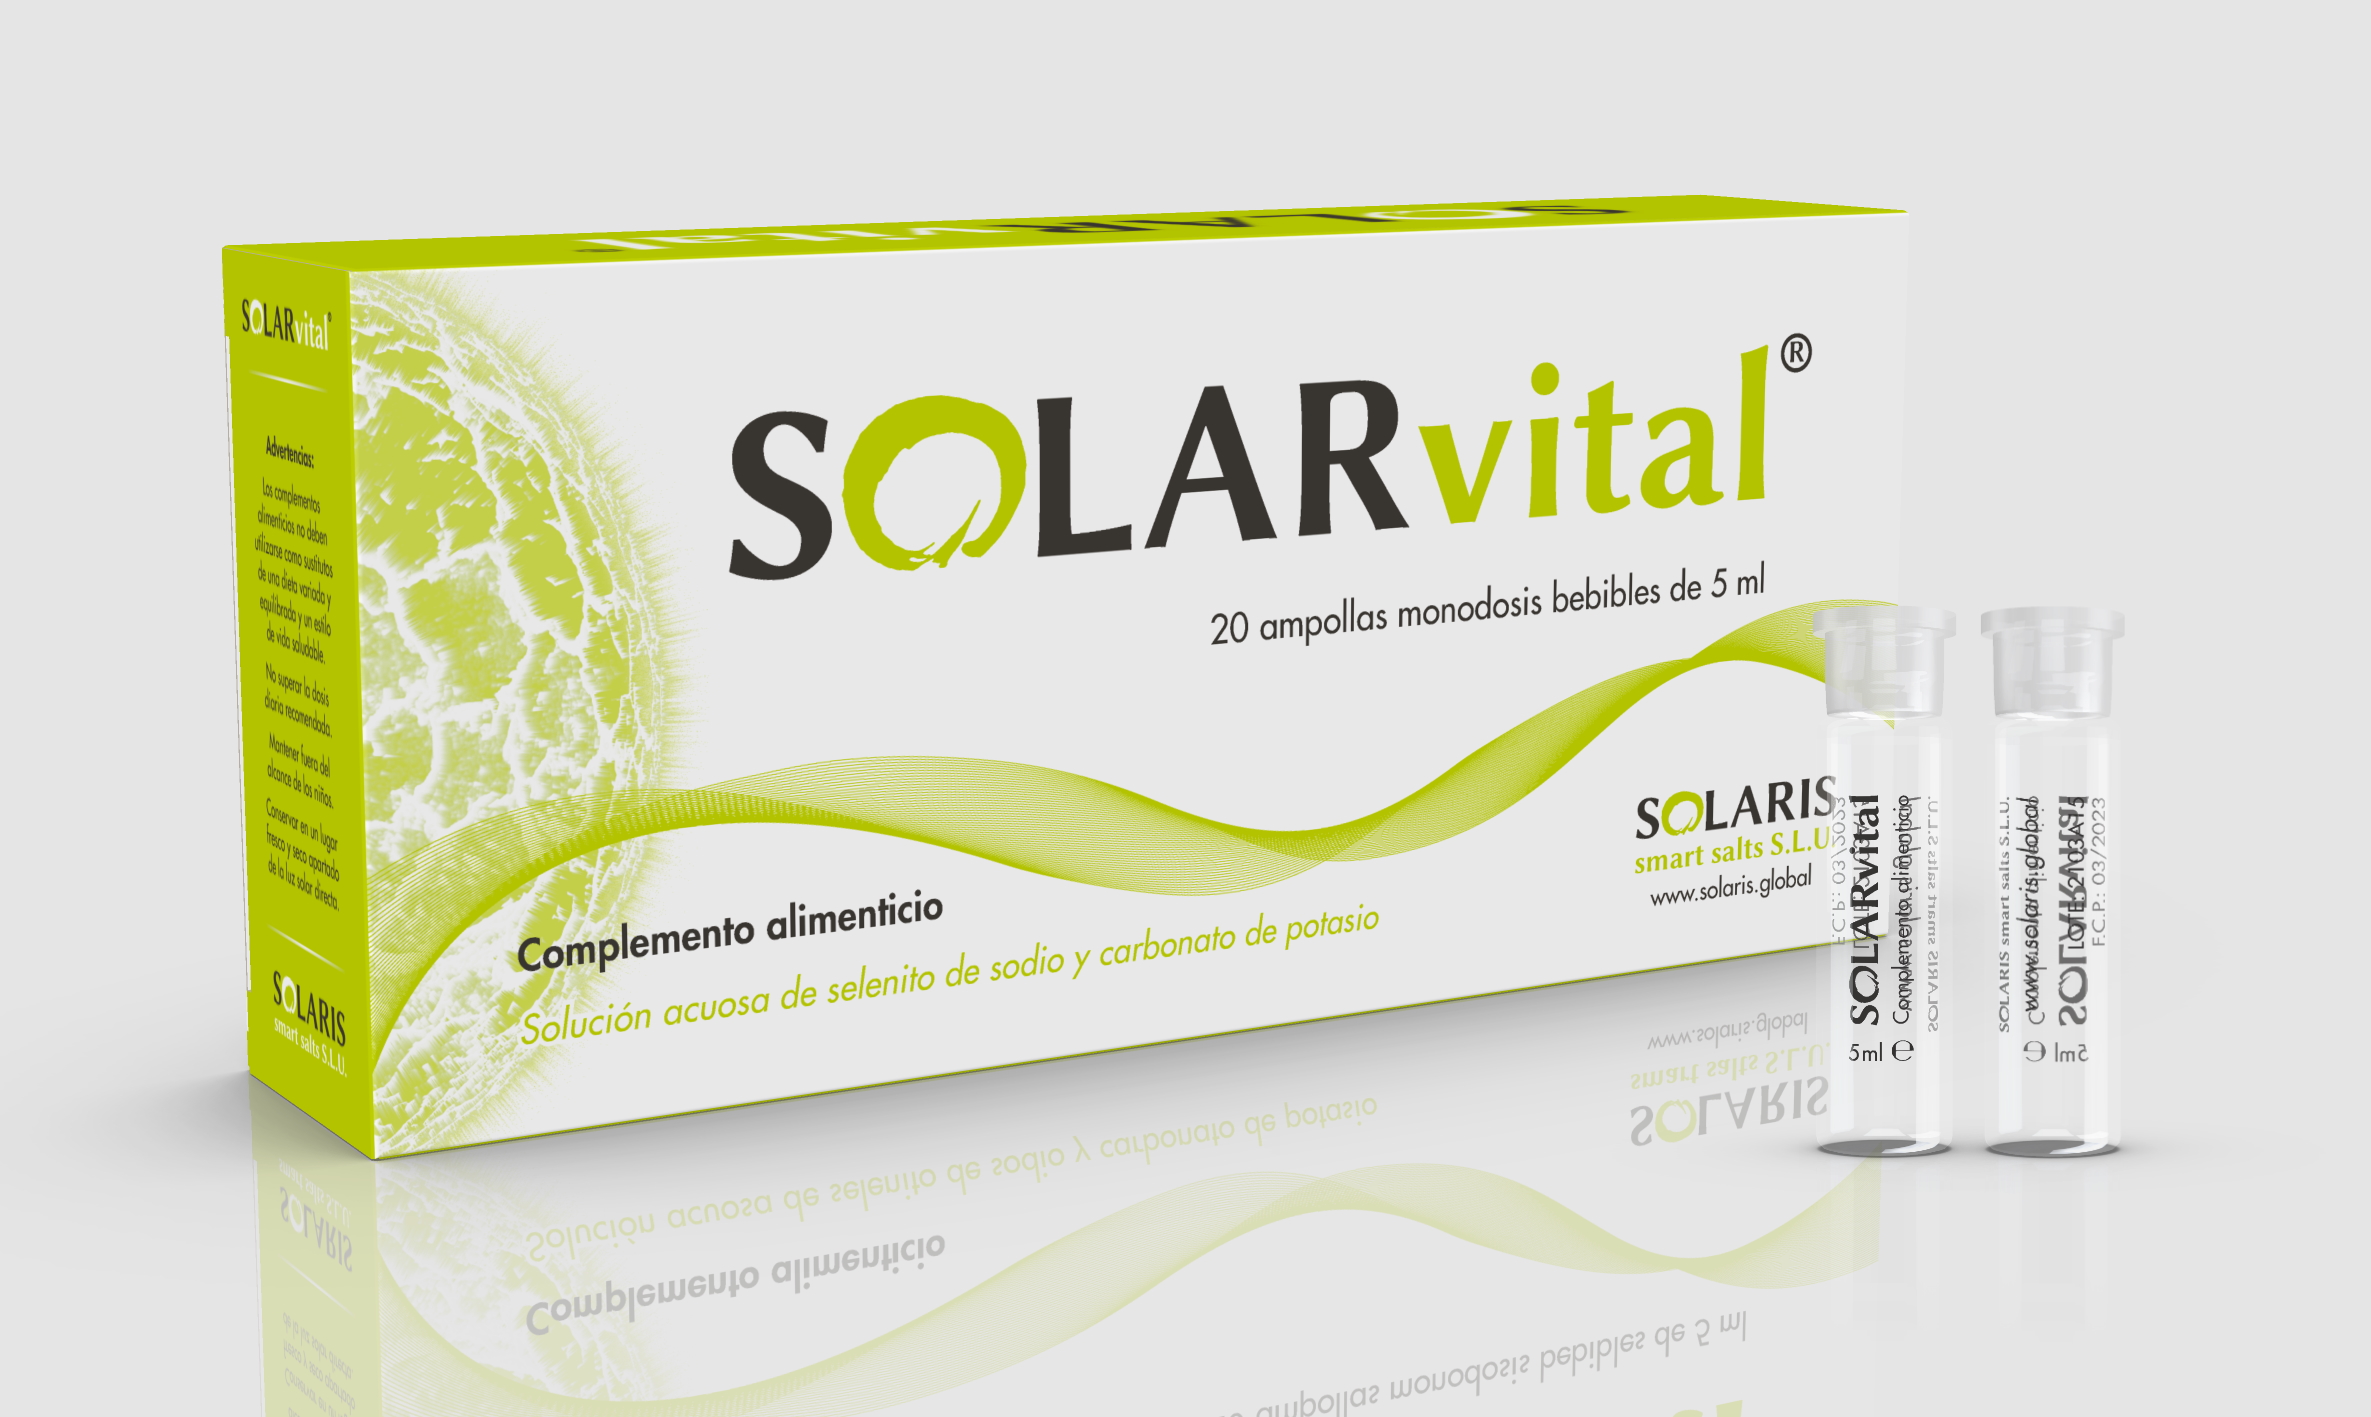 SOLARvital (Precio sin IVA)